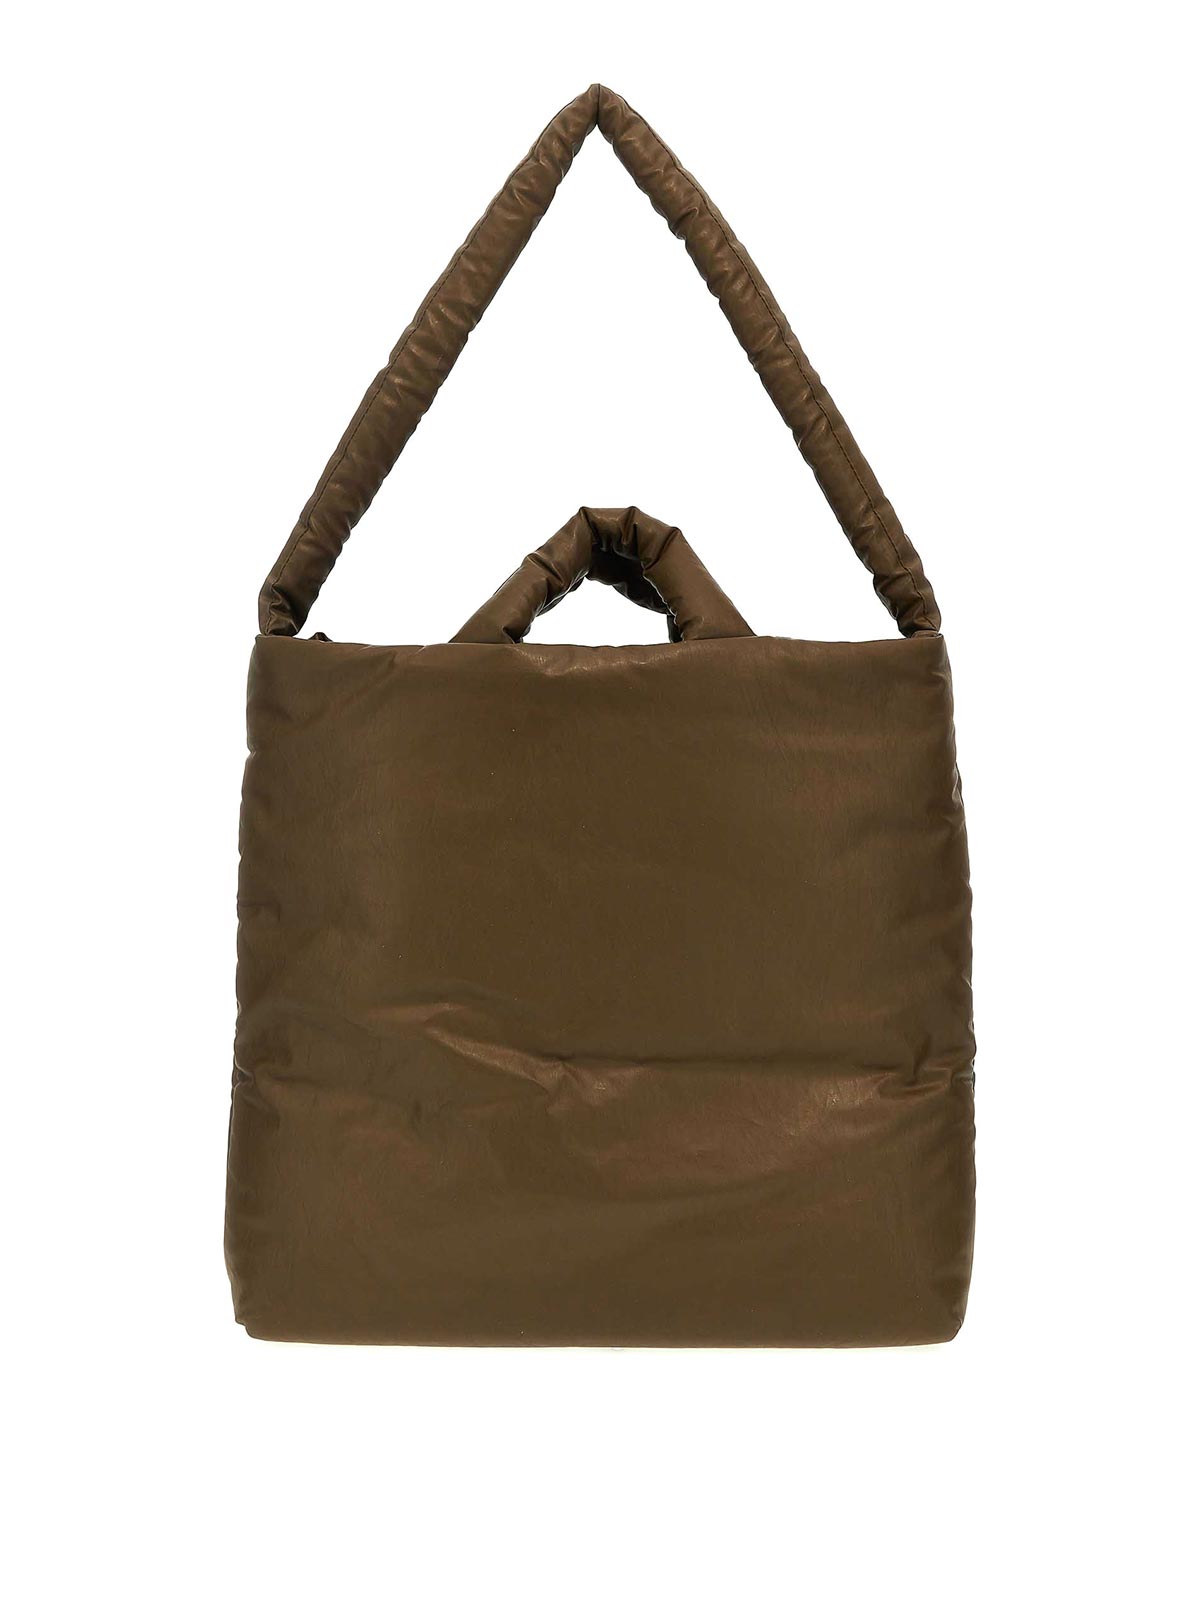 Shop Kassl Editions Pillow Medium Shopping Bag In Brown